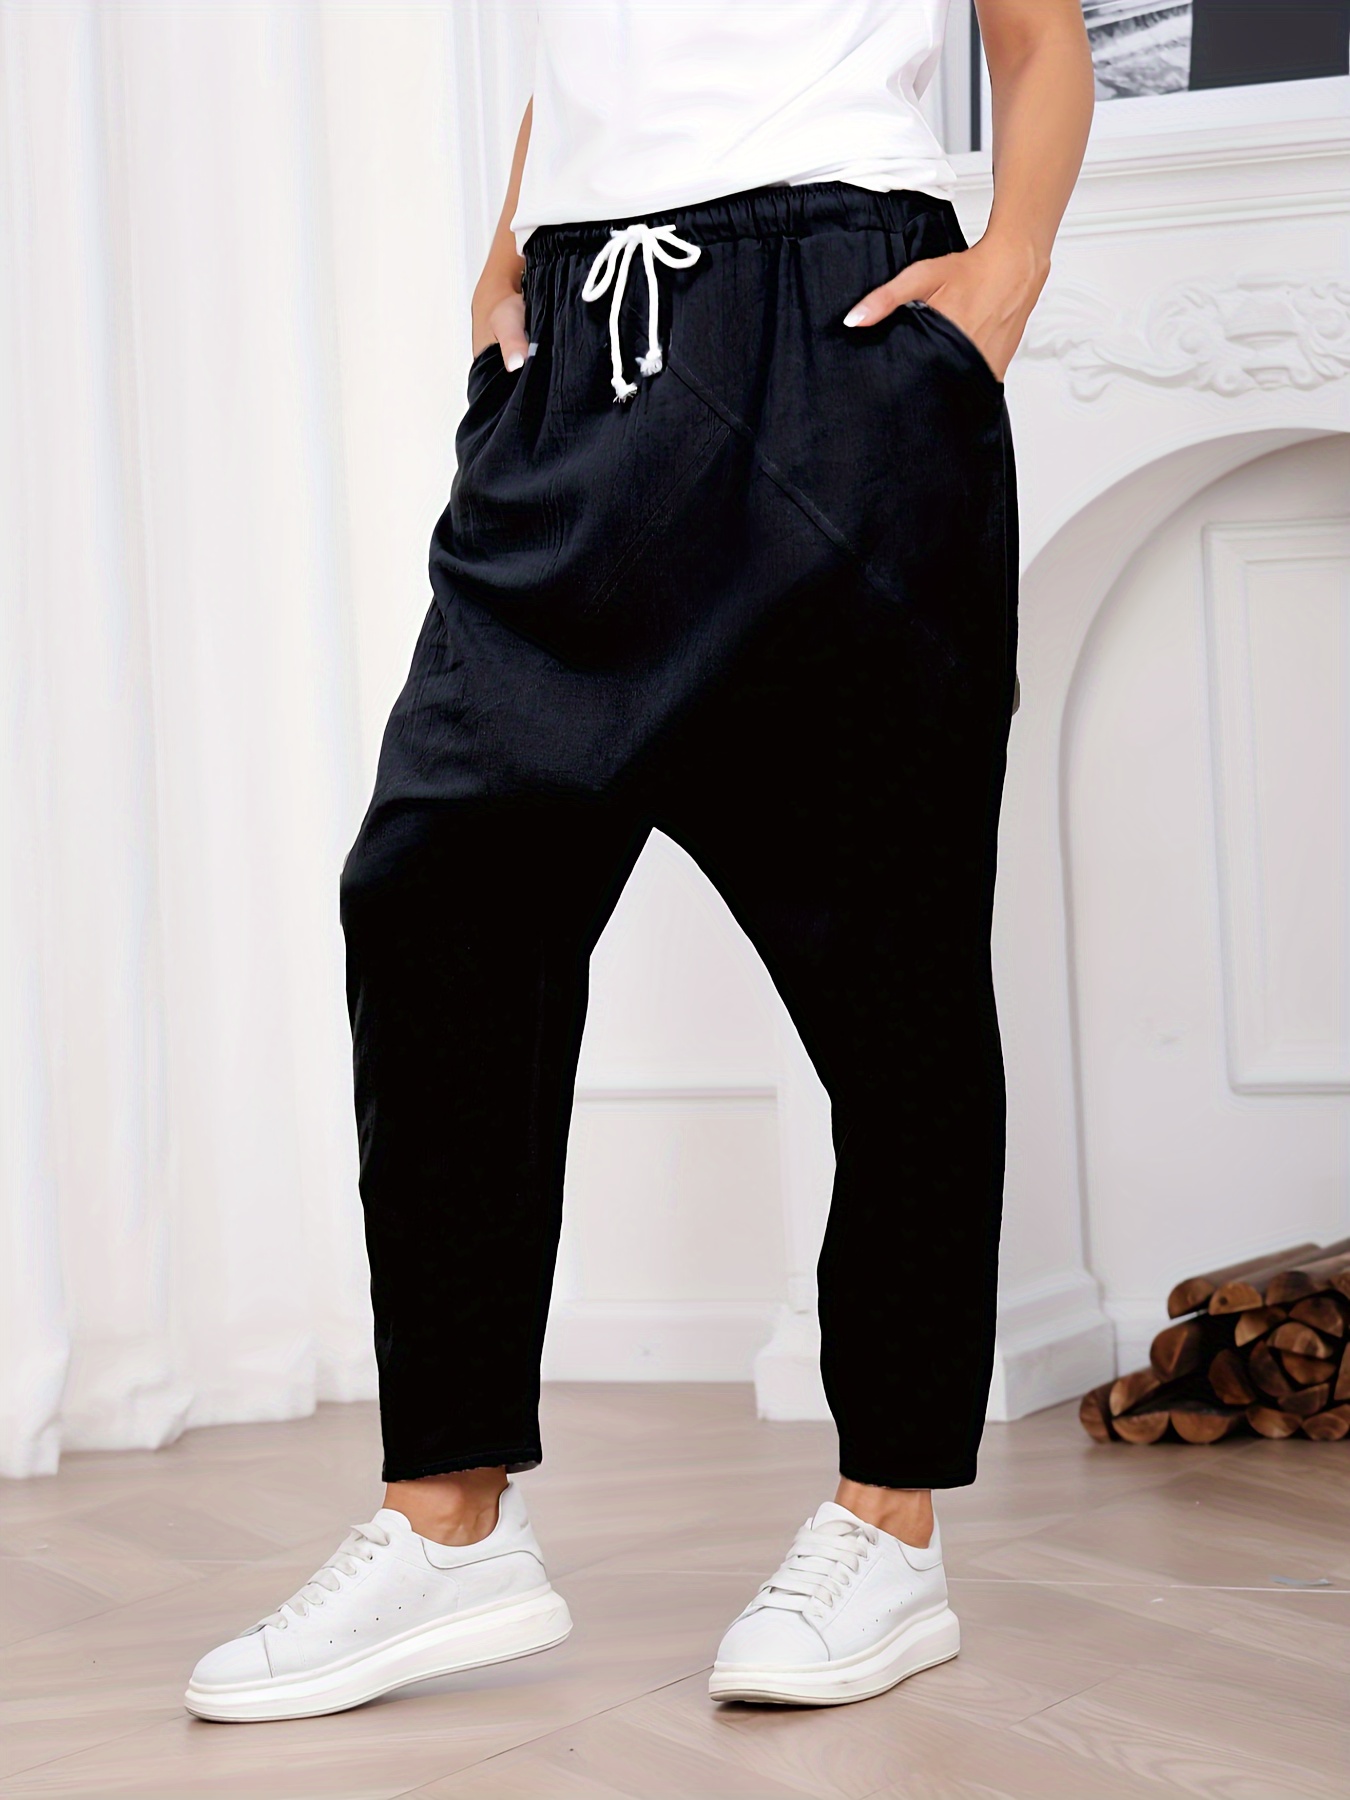 Letter Print Black Harem Pants Woman Casual Elastic Waist Sport Trousers  Female Korean Style Baggy Ankle-Tied Sweatpants Women